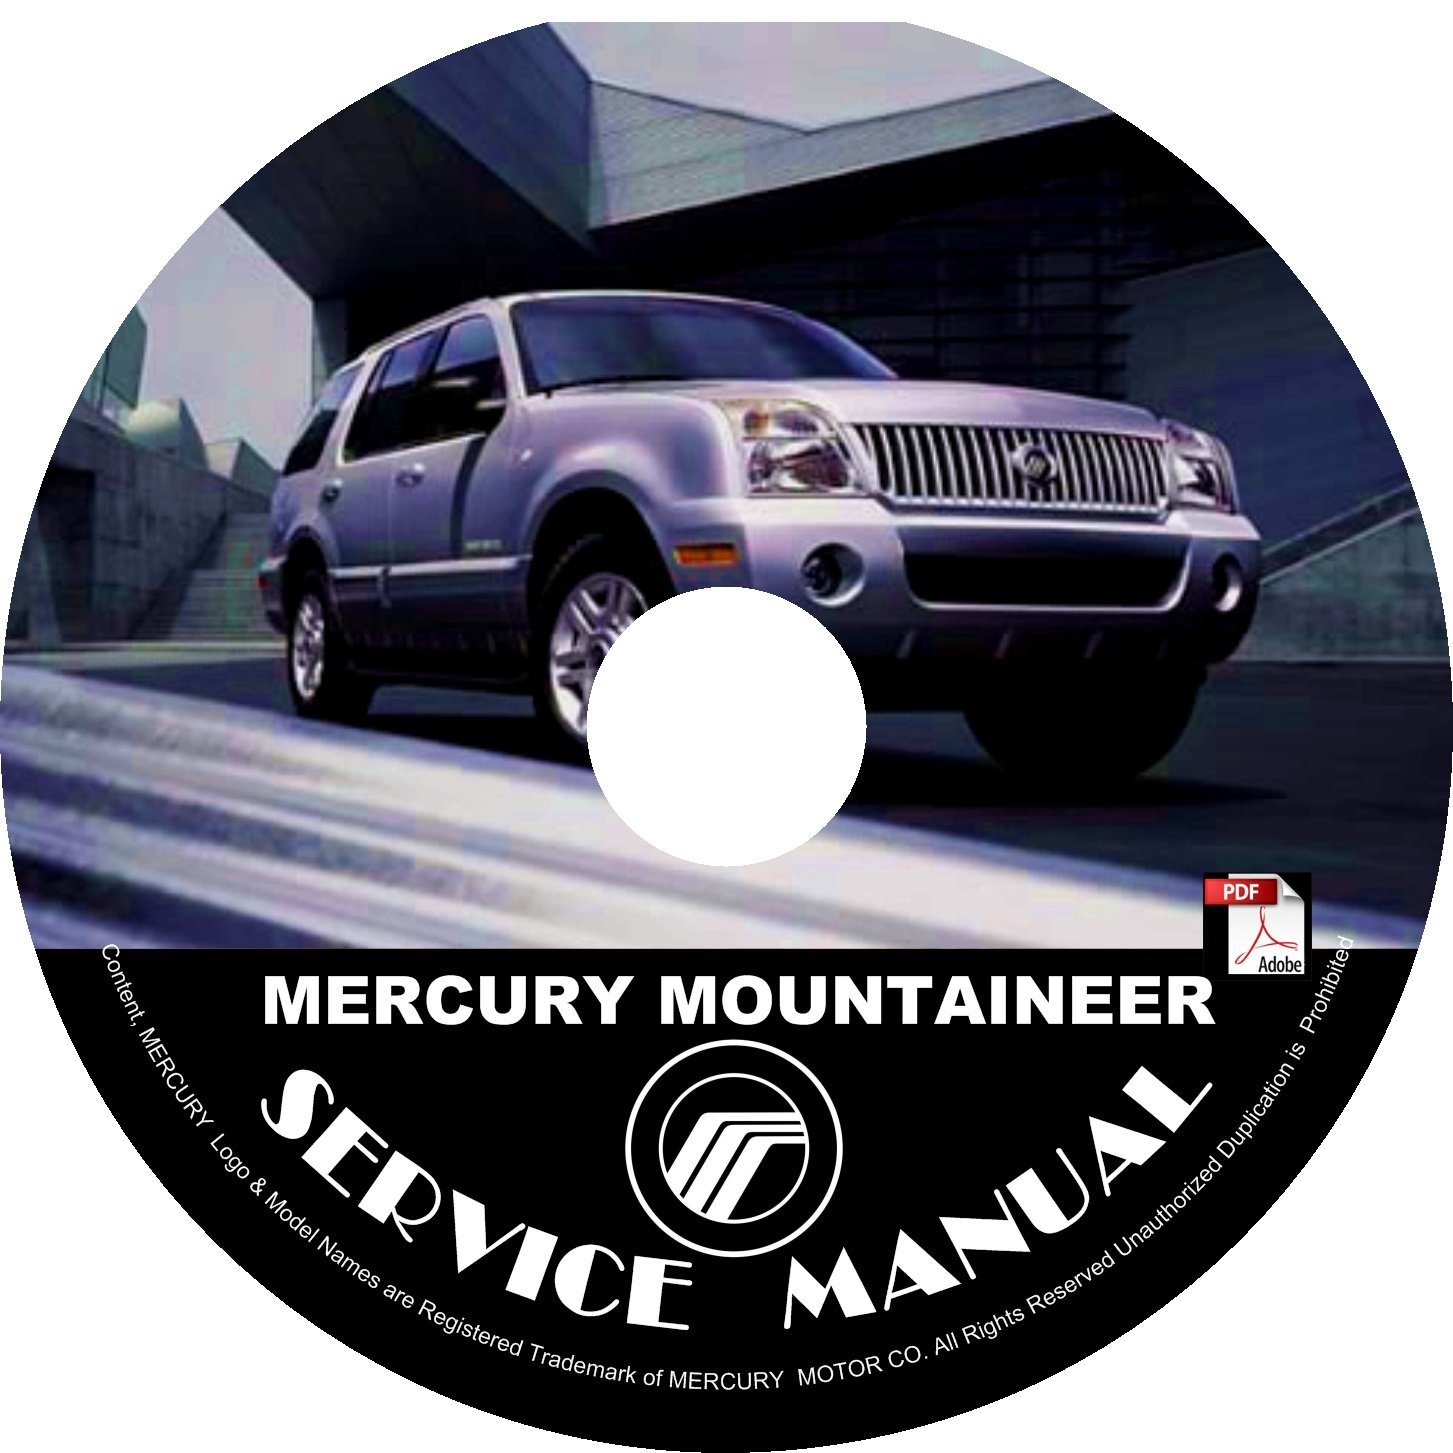 2004 Mercury Mountaineer Engine Service Repair Shop Manual on CD Fix Repair Rebuild '04 Workshop